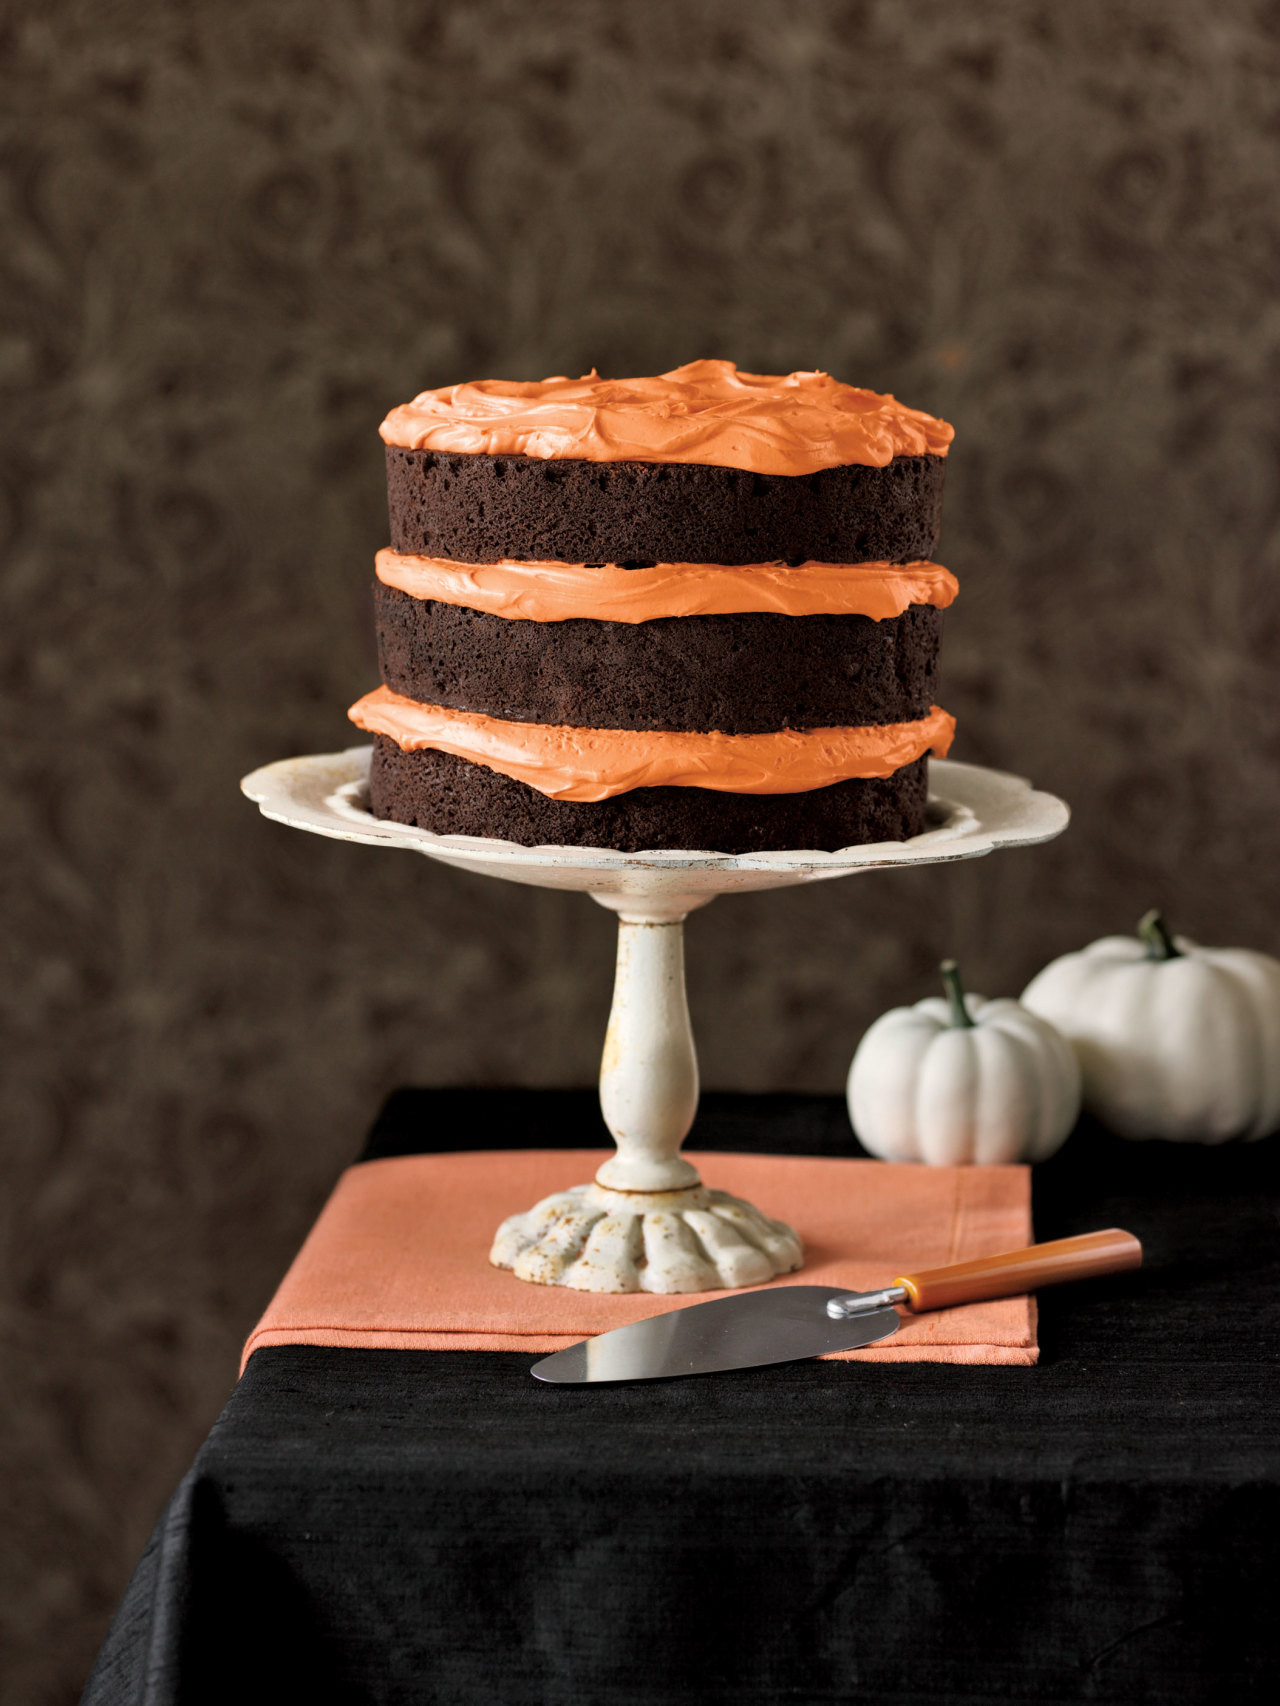 Simple Halloween Cakes
 36 Spooky Halloween Cakes Recipes for Easy Halloween